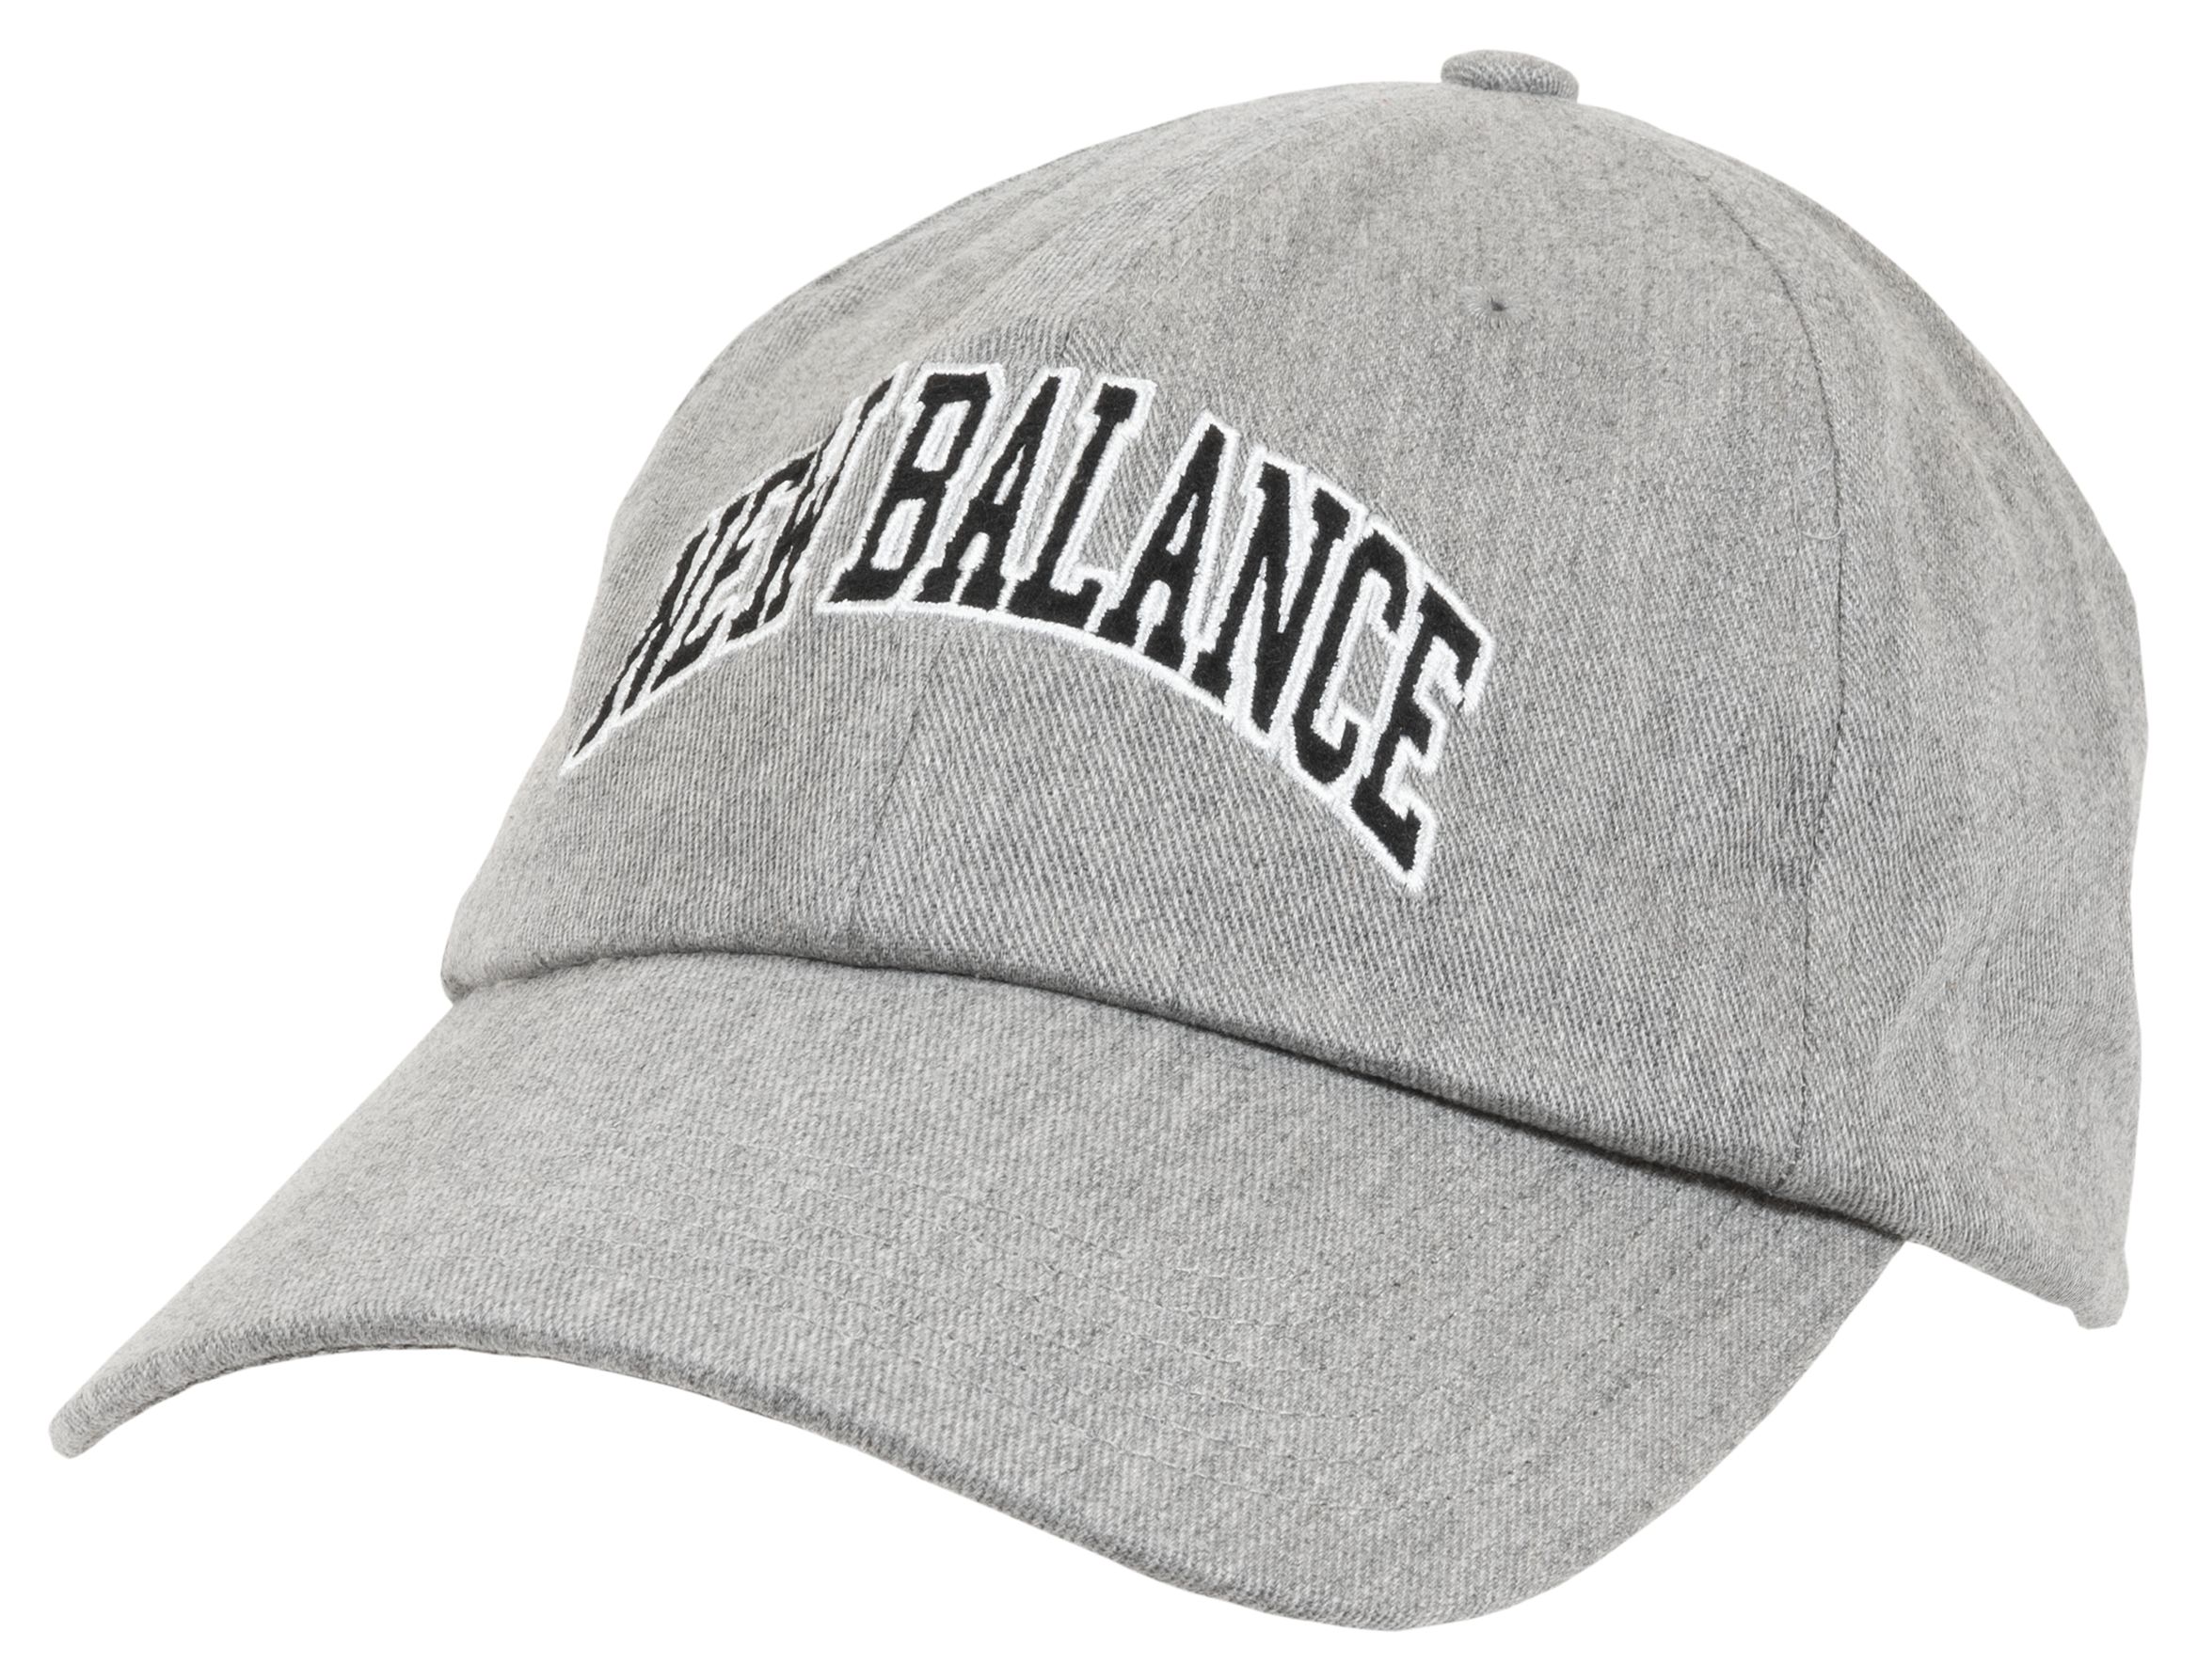 NB Logo Hat - New Balance